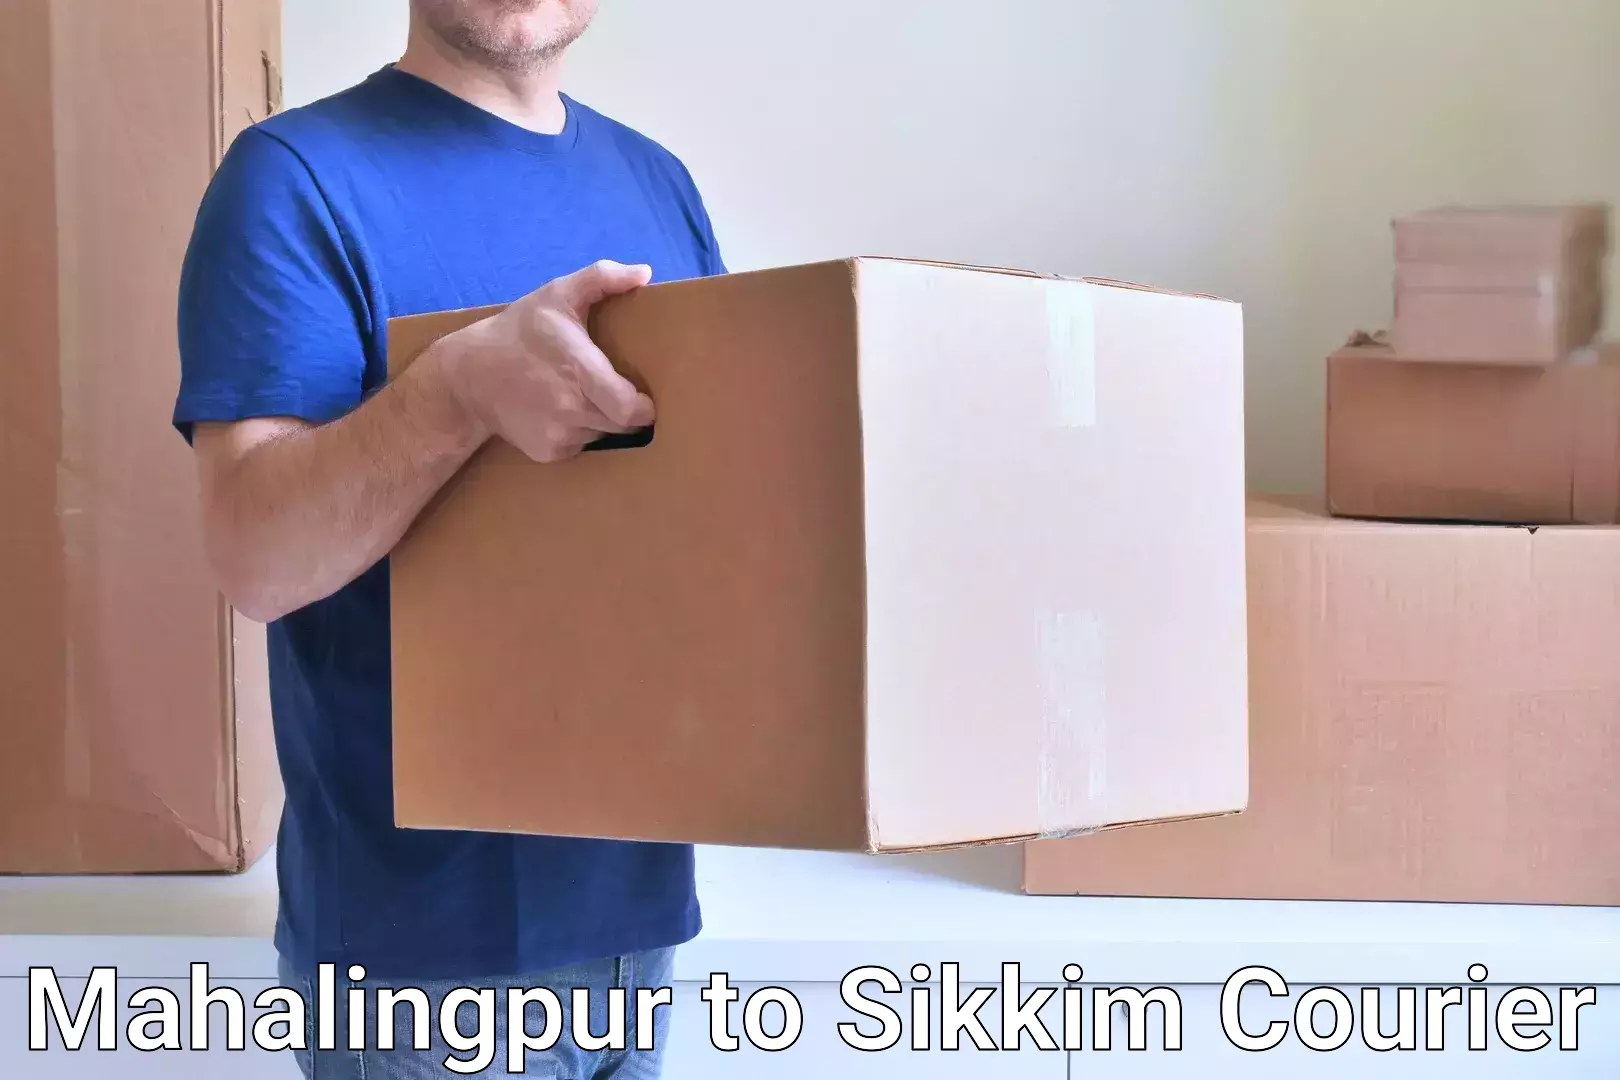 Customer-focused courier Mahalingpur to Pelling